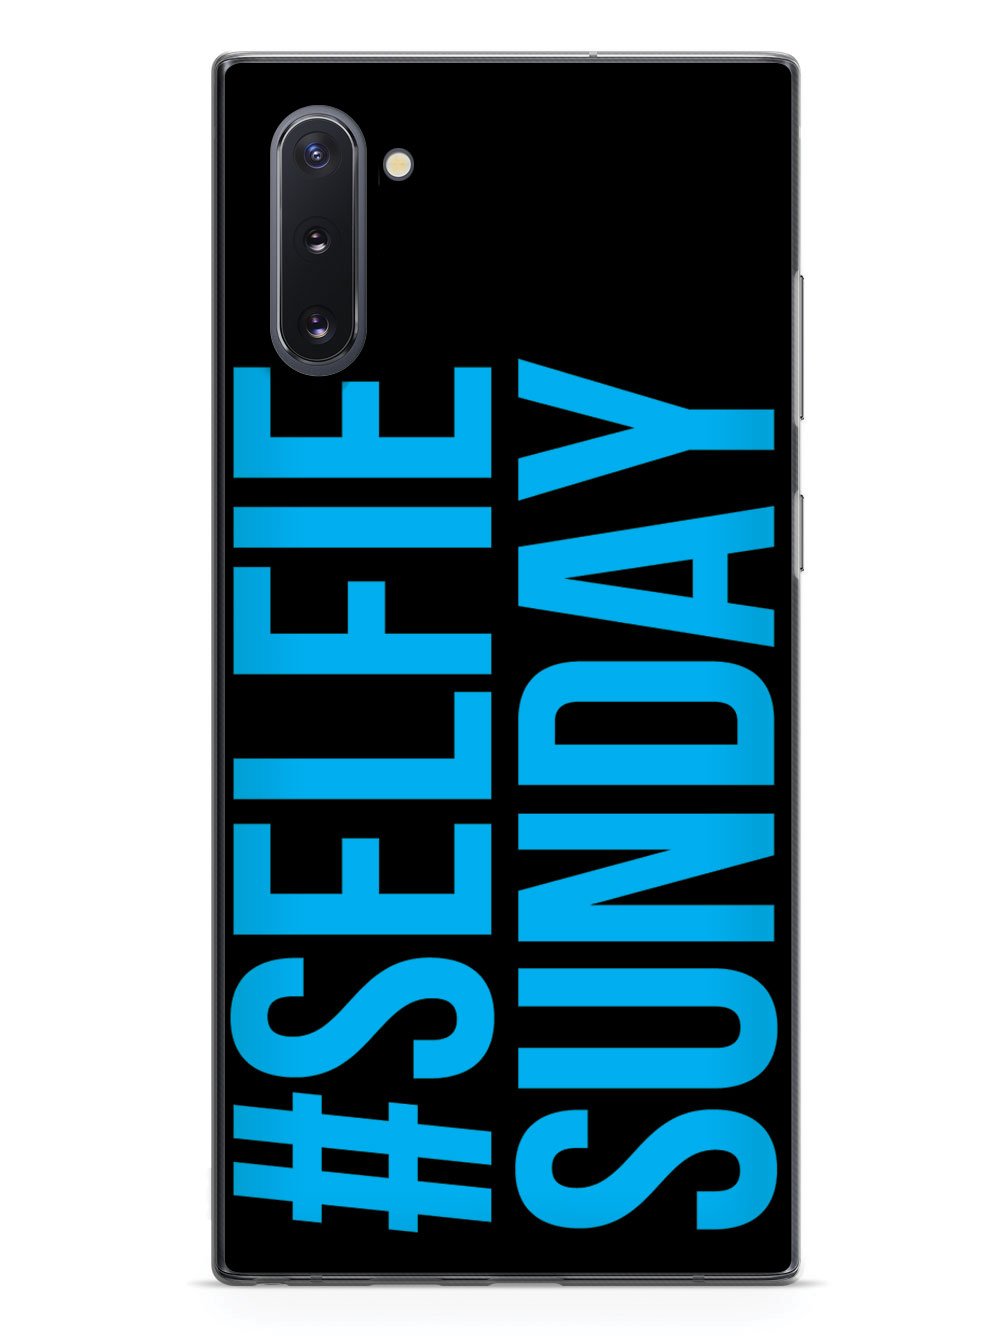 #SelfieSunday Blue Selfie Sunday Case